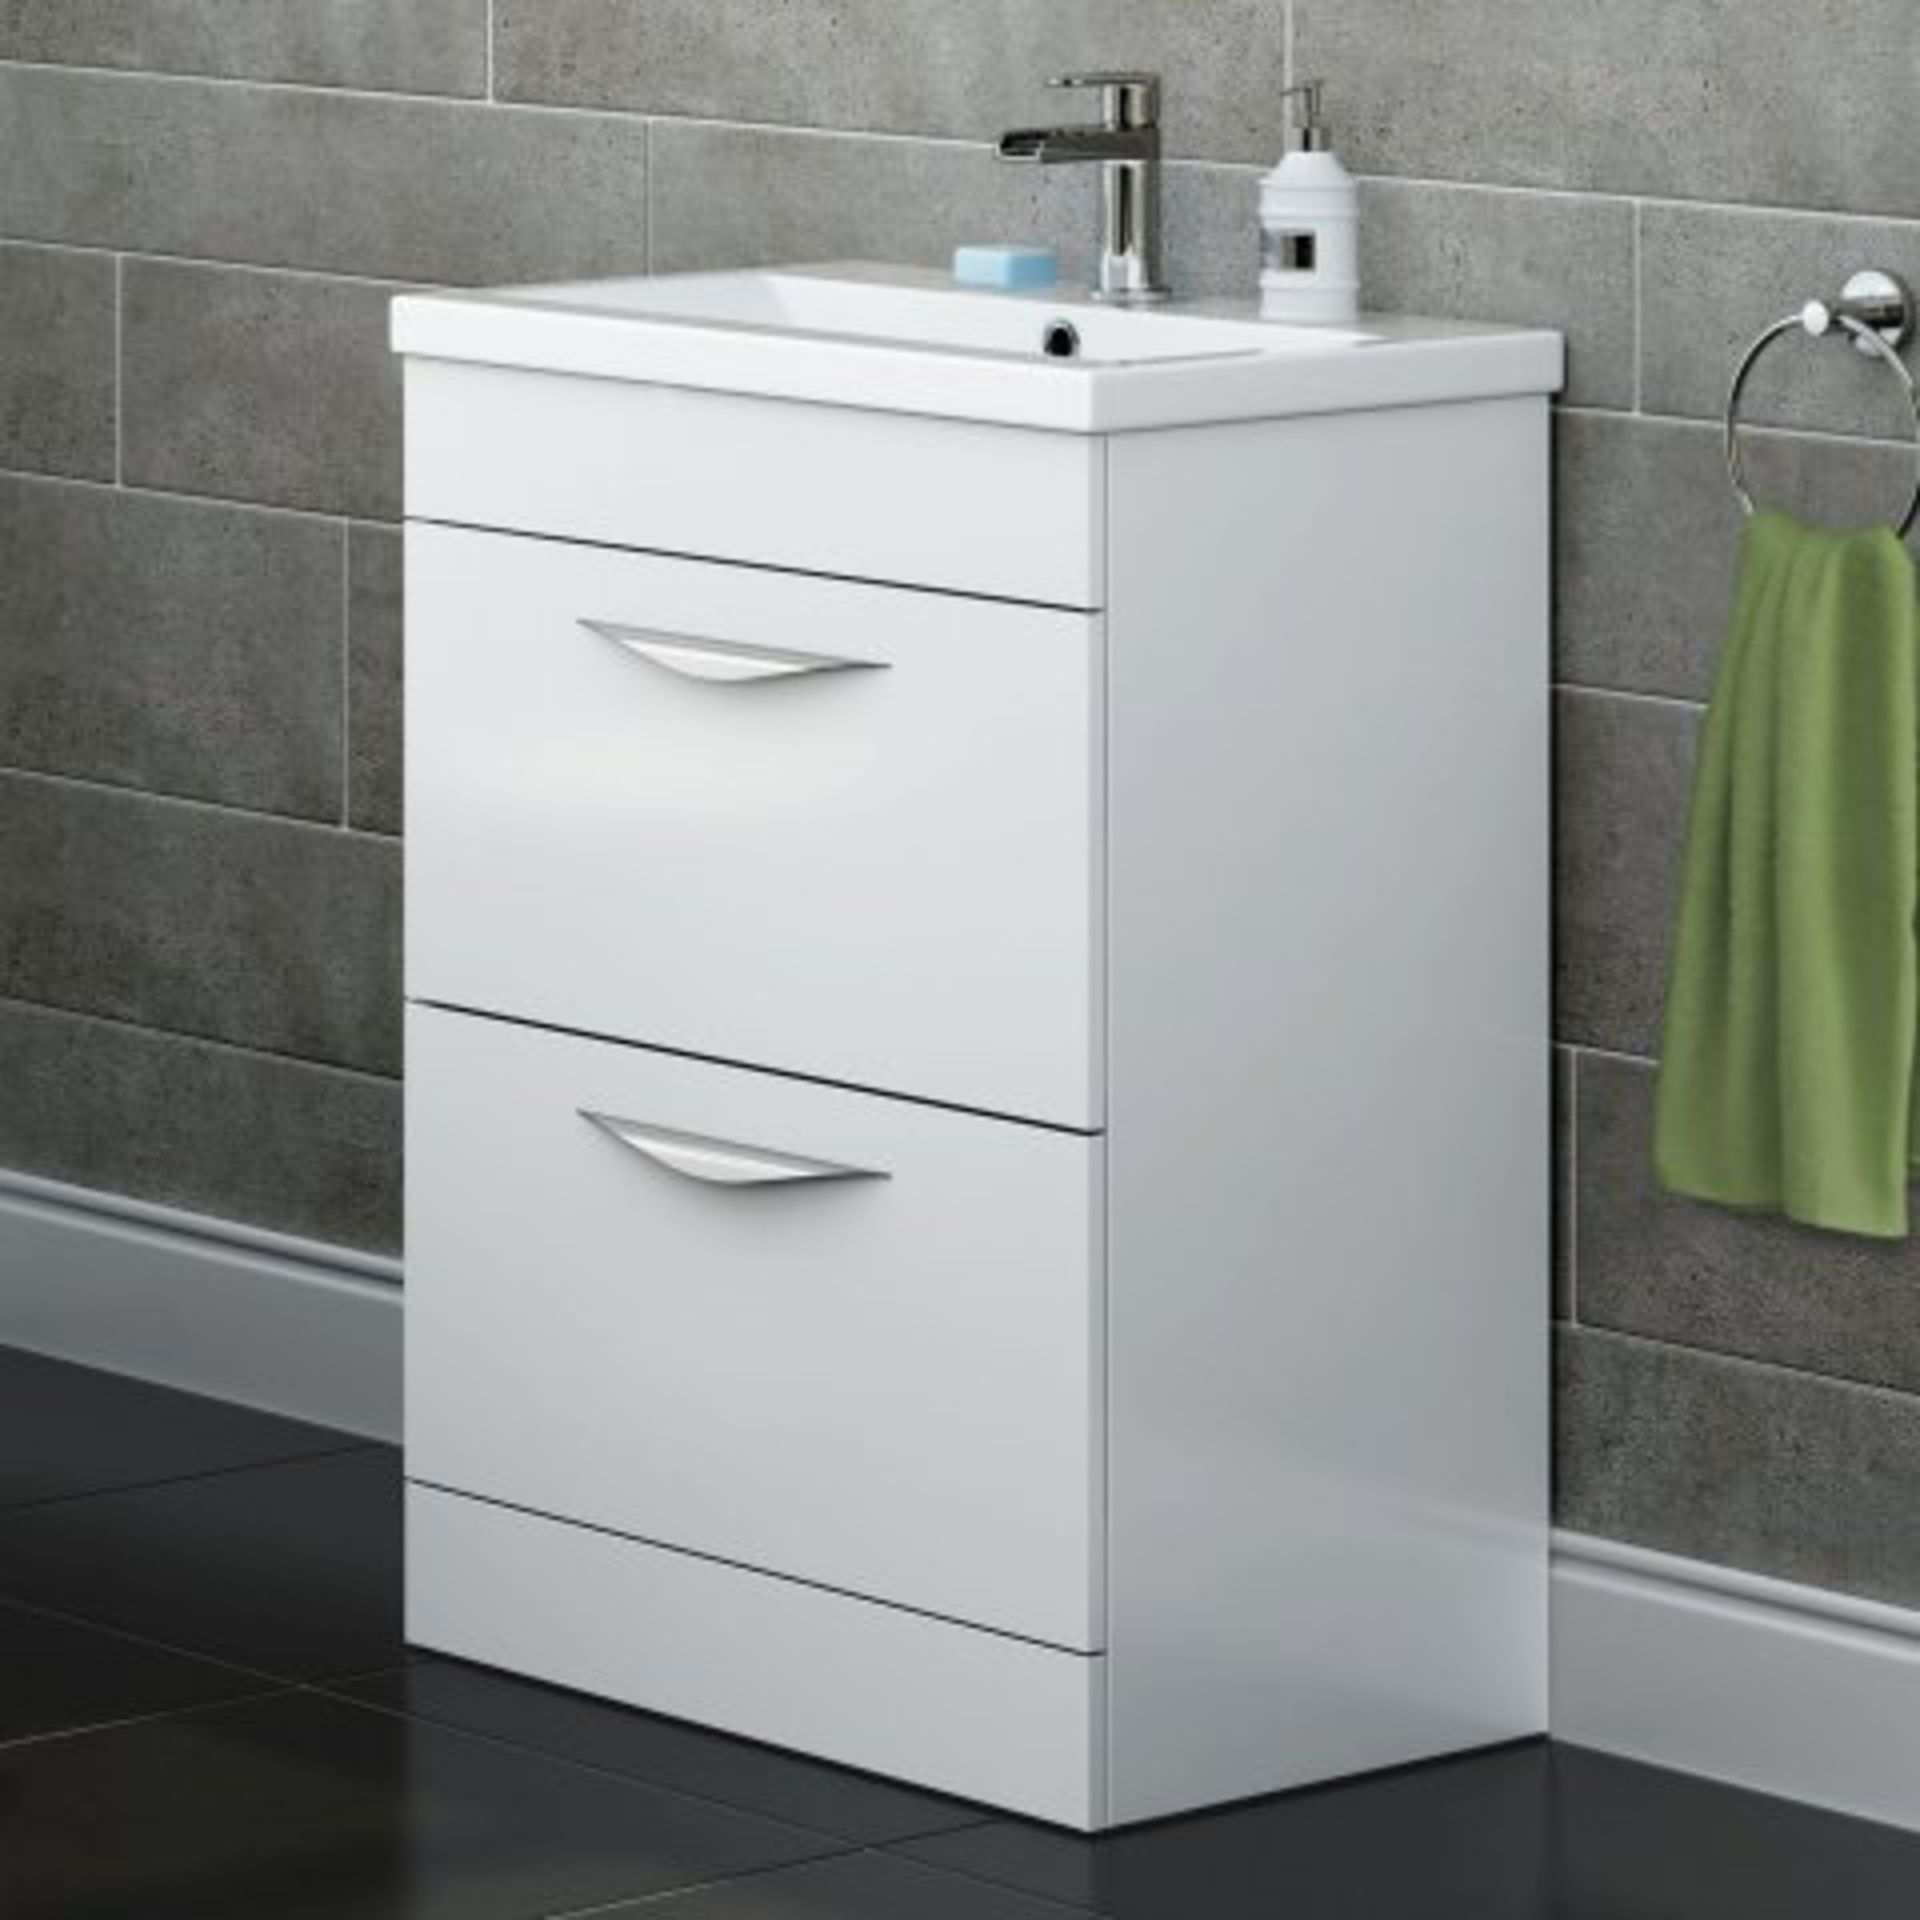 (SKU21) 600mm Severn High Gloss White Double Drawer Basin Cabinet - Floor Standing. RRP £269.99.